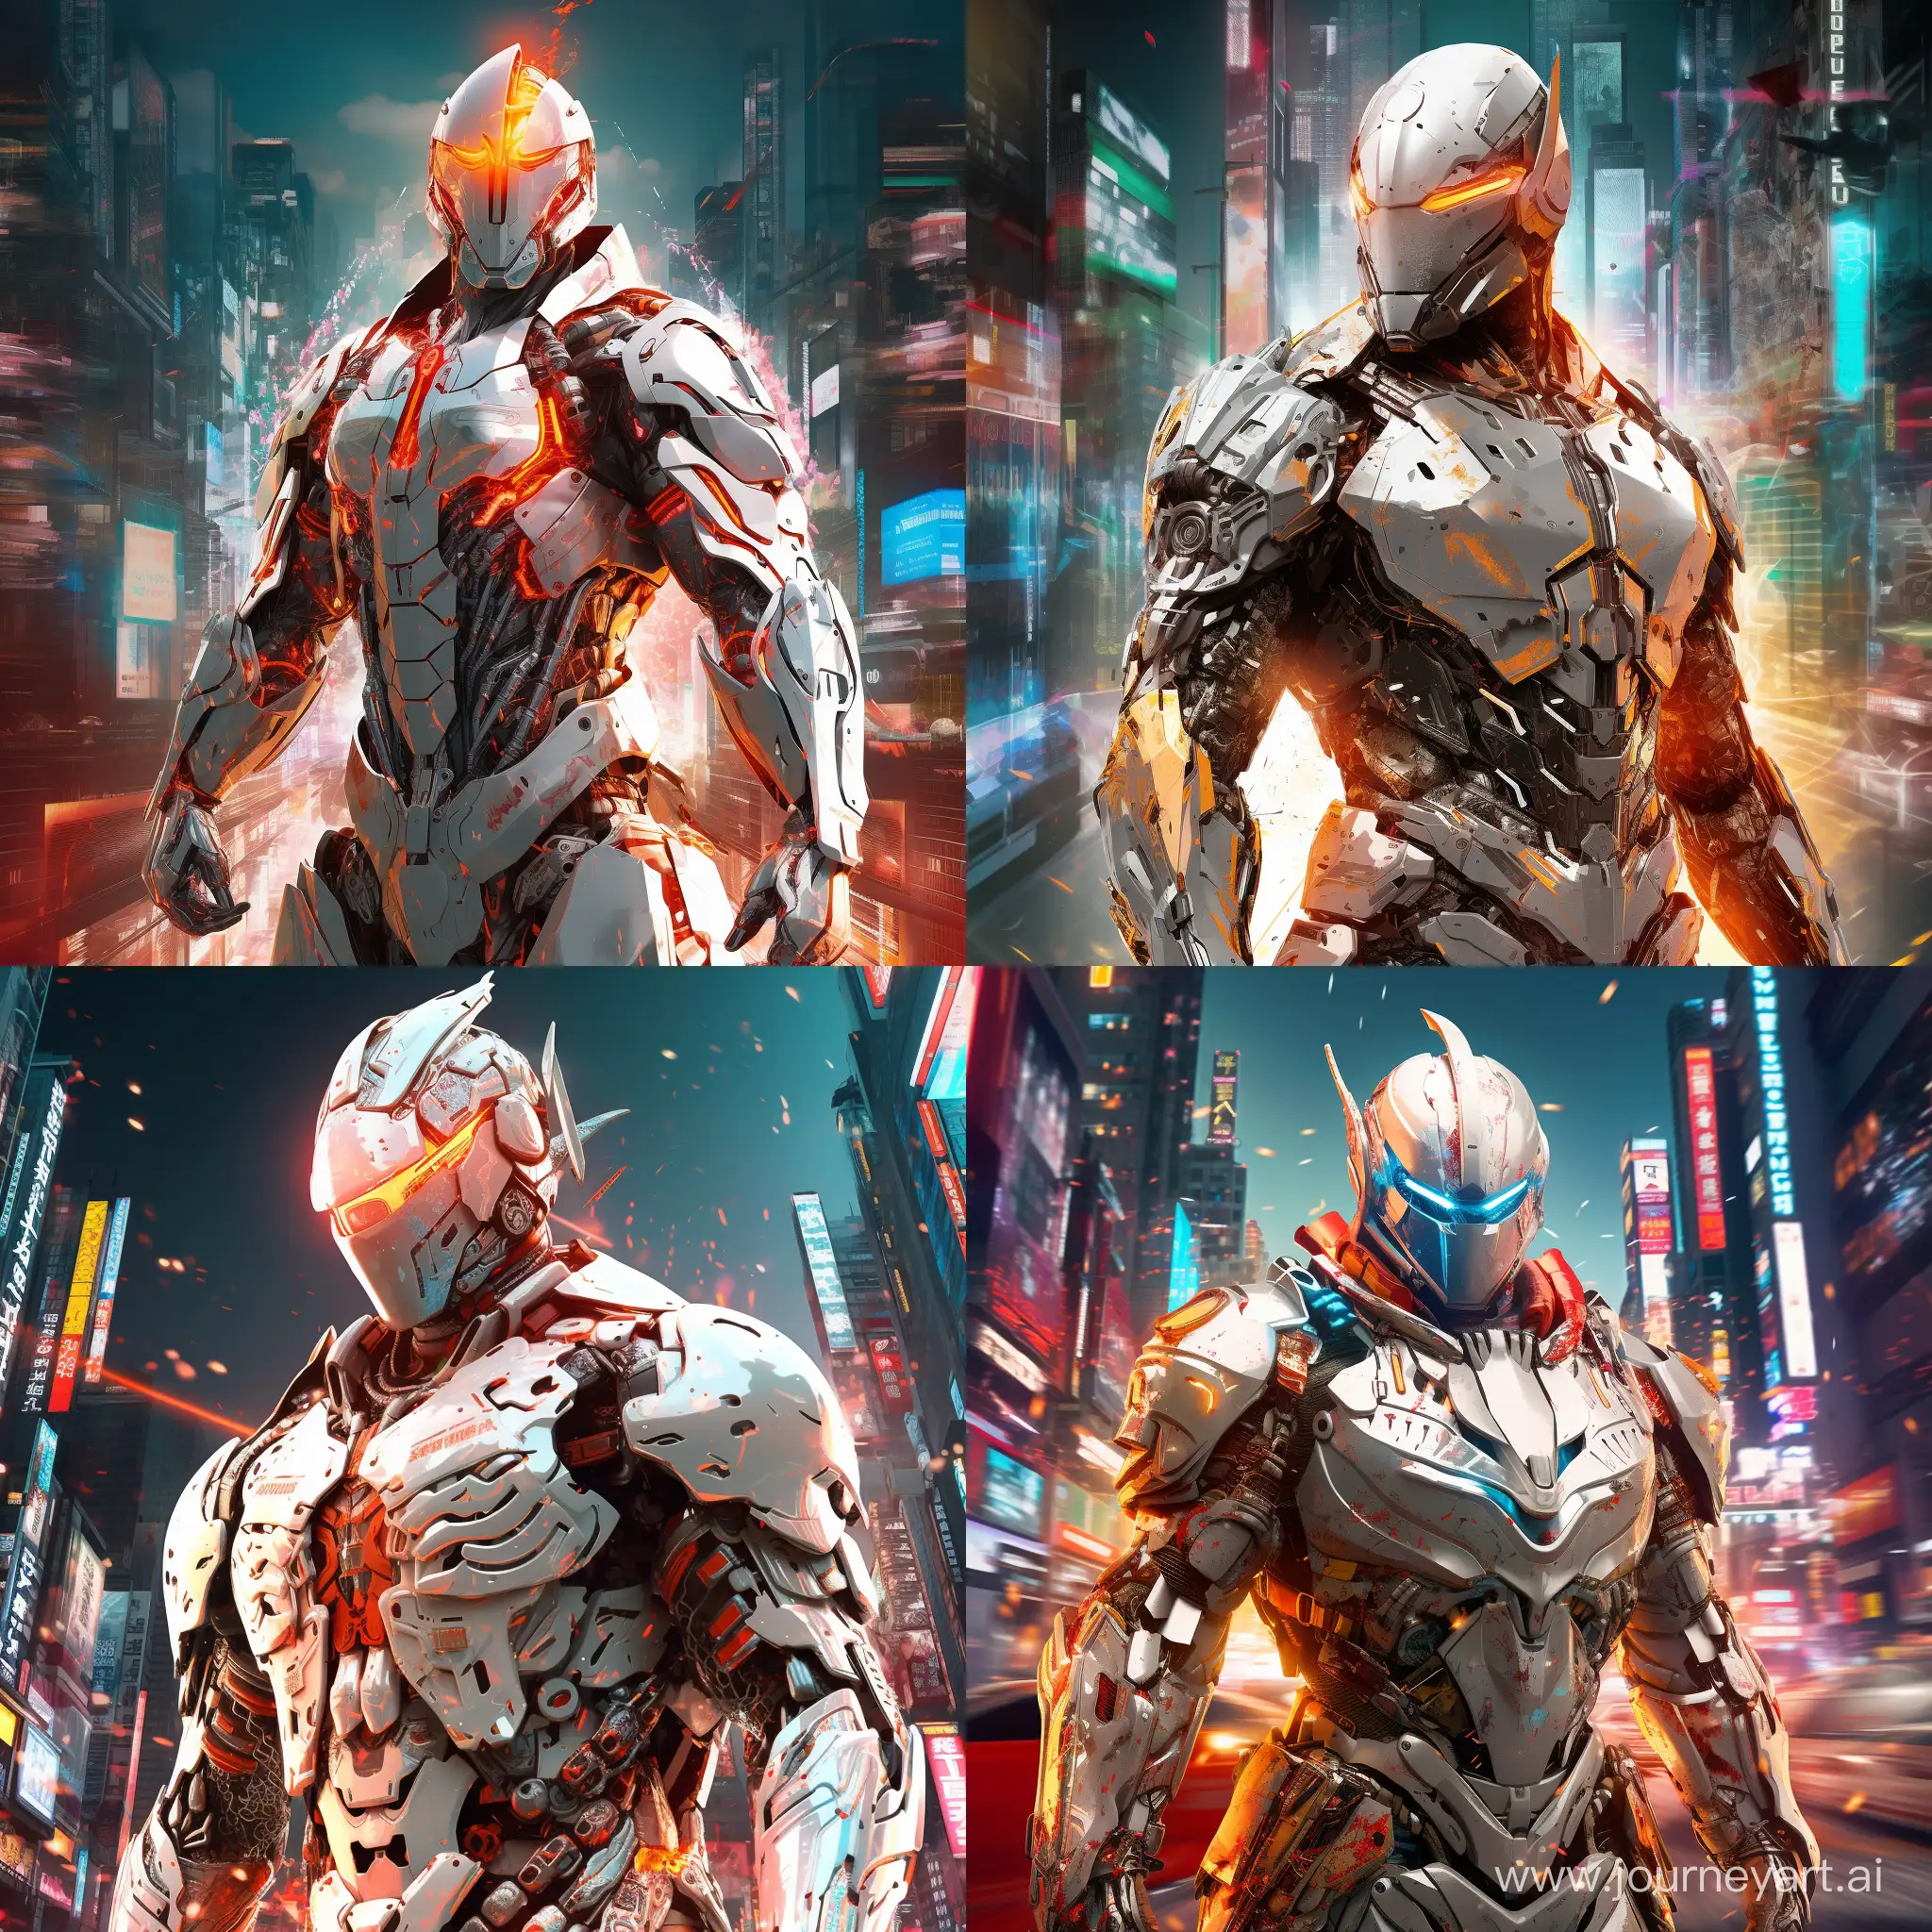 Futuristic-Cyberpunk-White-Knight-in-Fiery-Techno-Armor